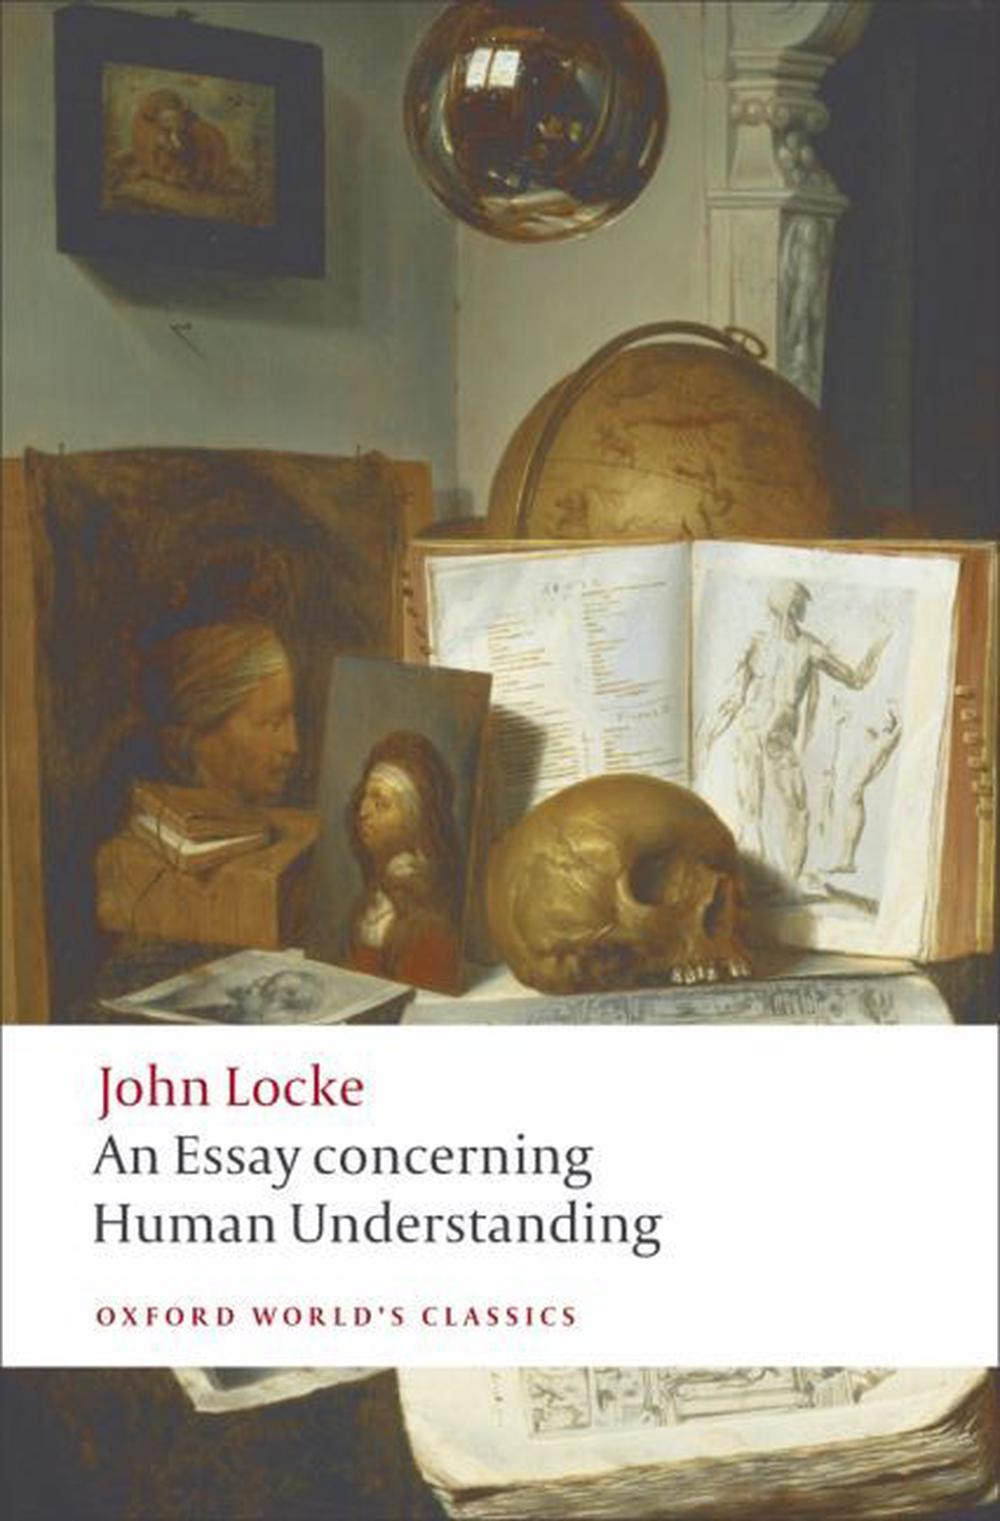 in 1690 john locke publishes an essay concerning human understanding